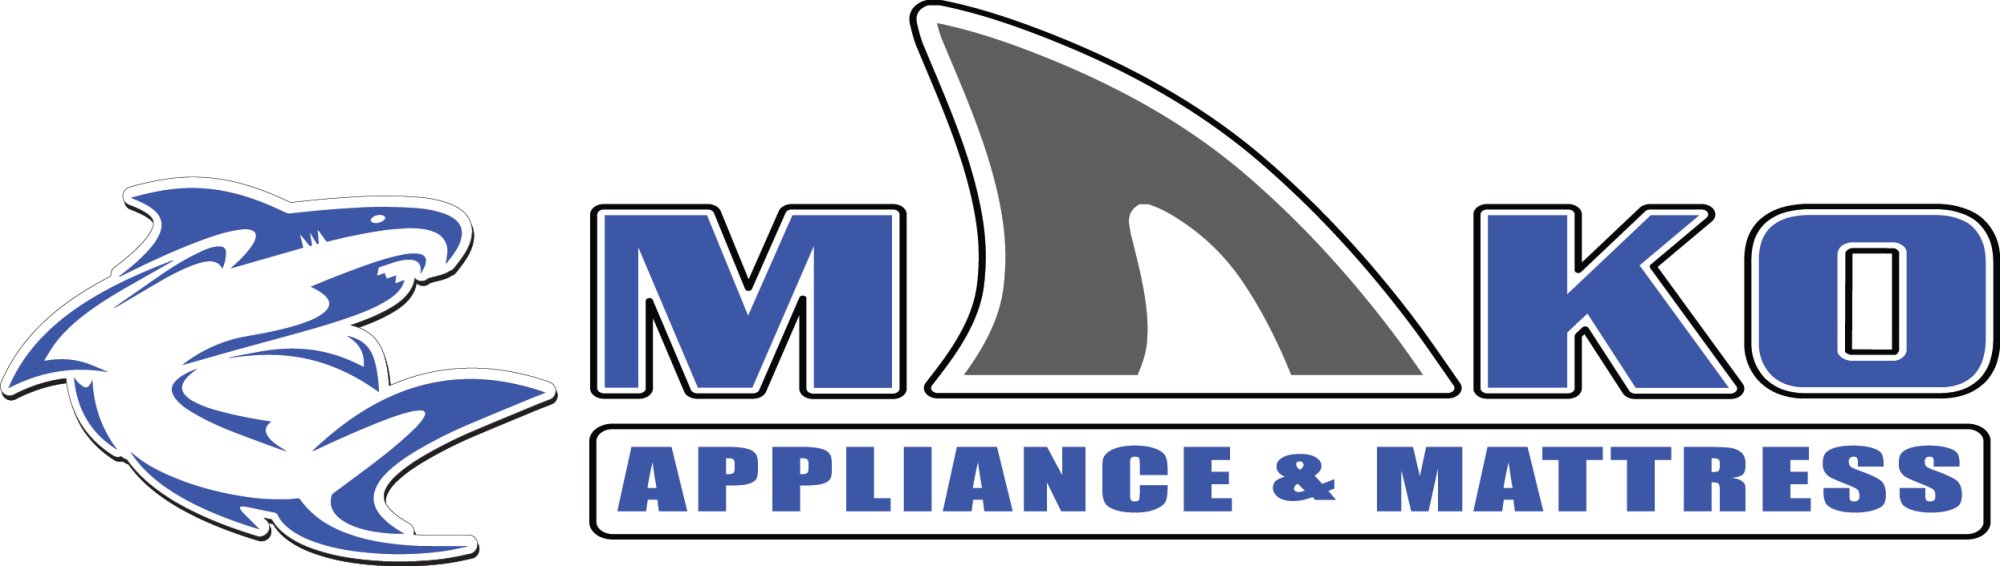 Household Appliance Logo - Household Appliances, Appliance Store, Appliance Center ...